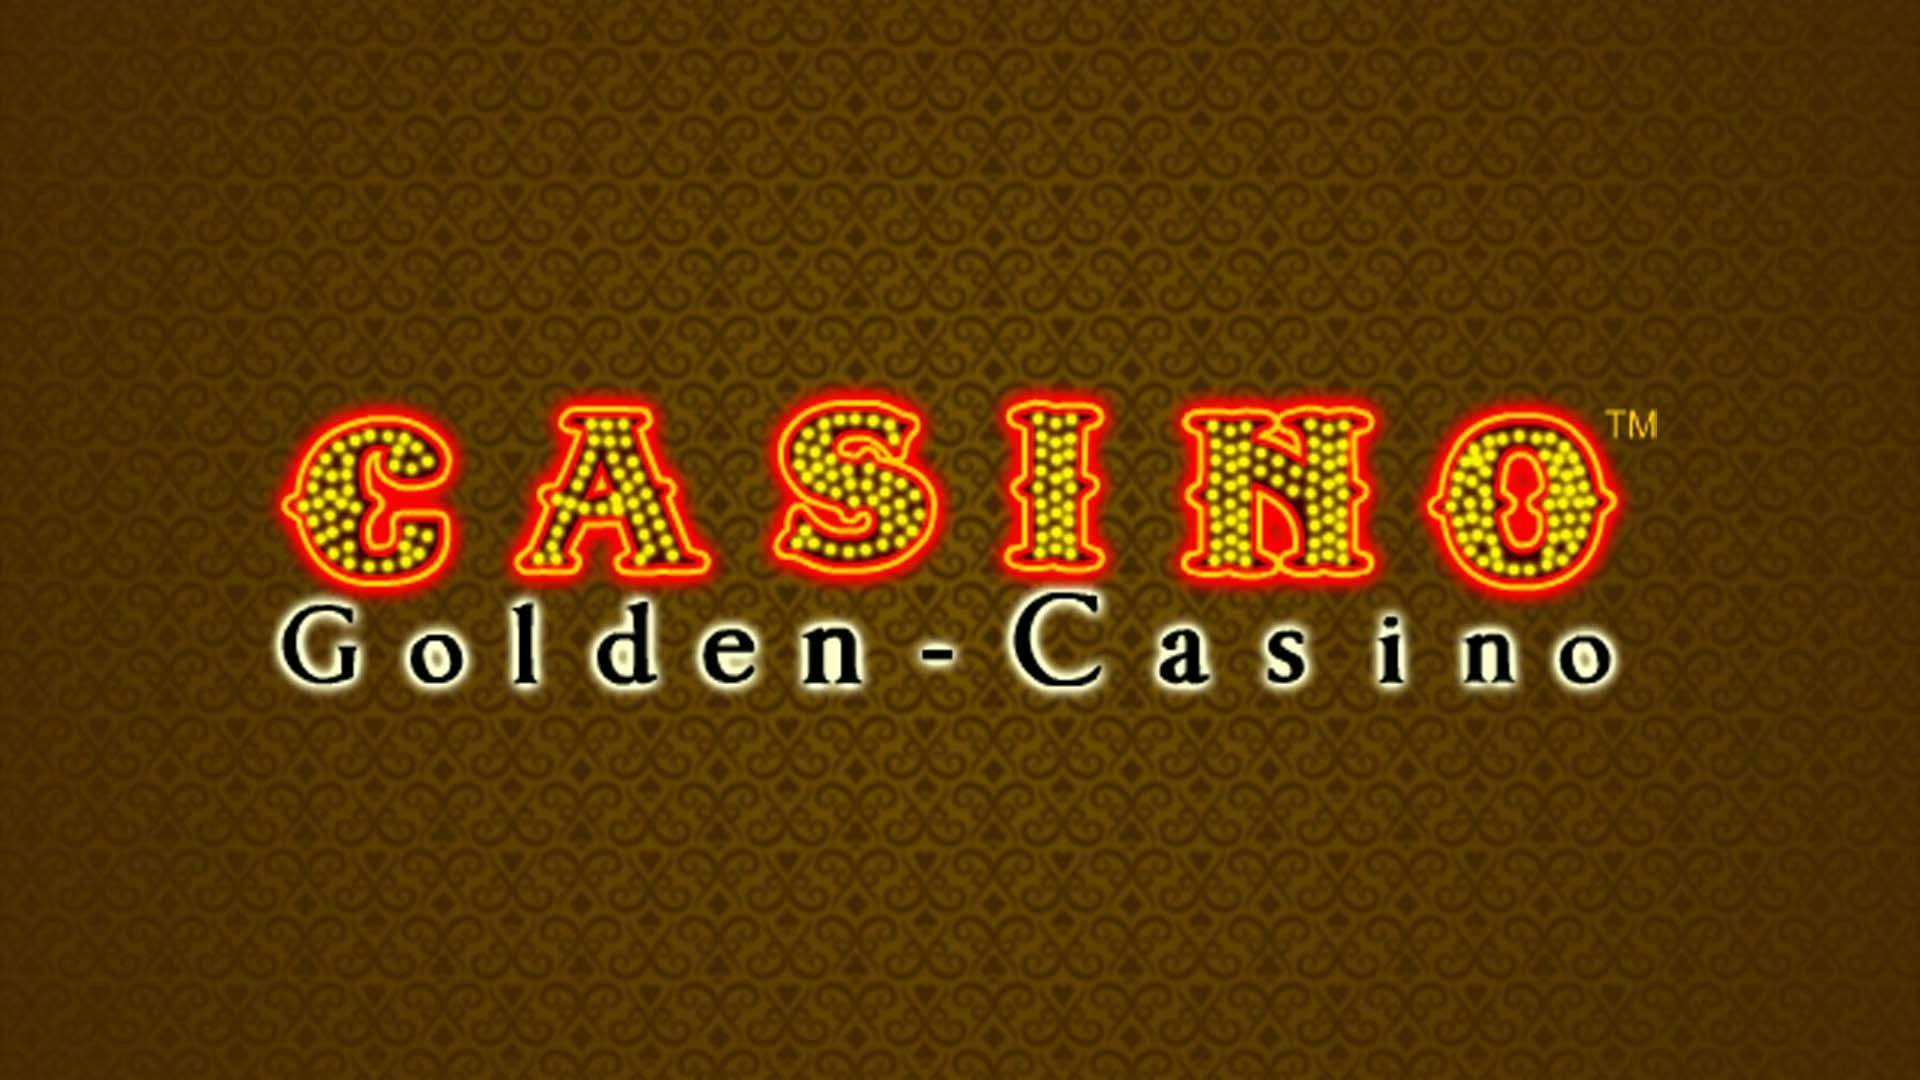 Golden Casino Slot Machine Online Free Game Play